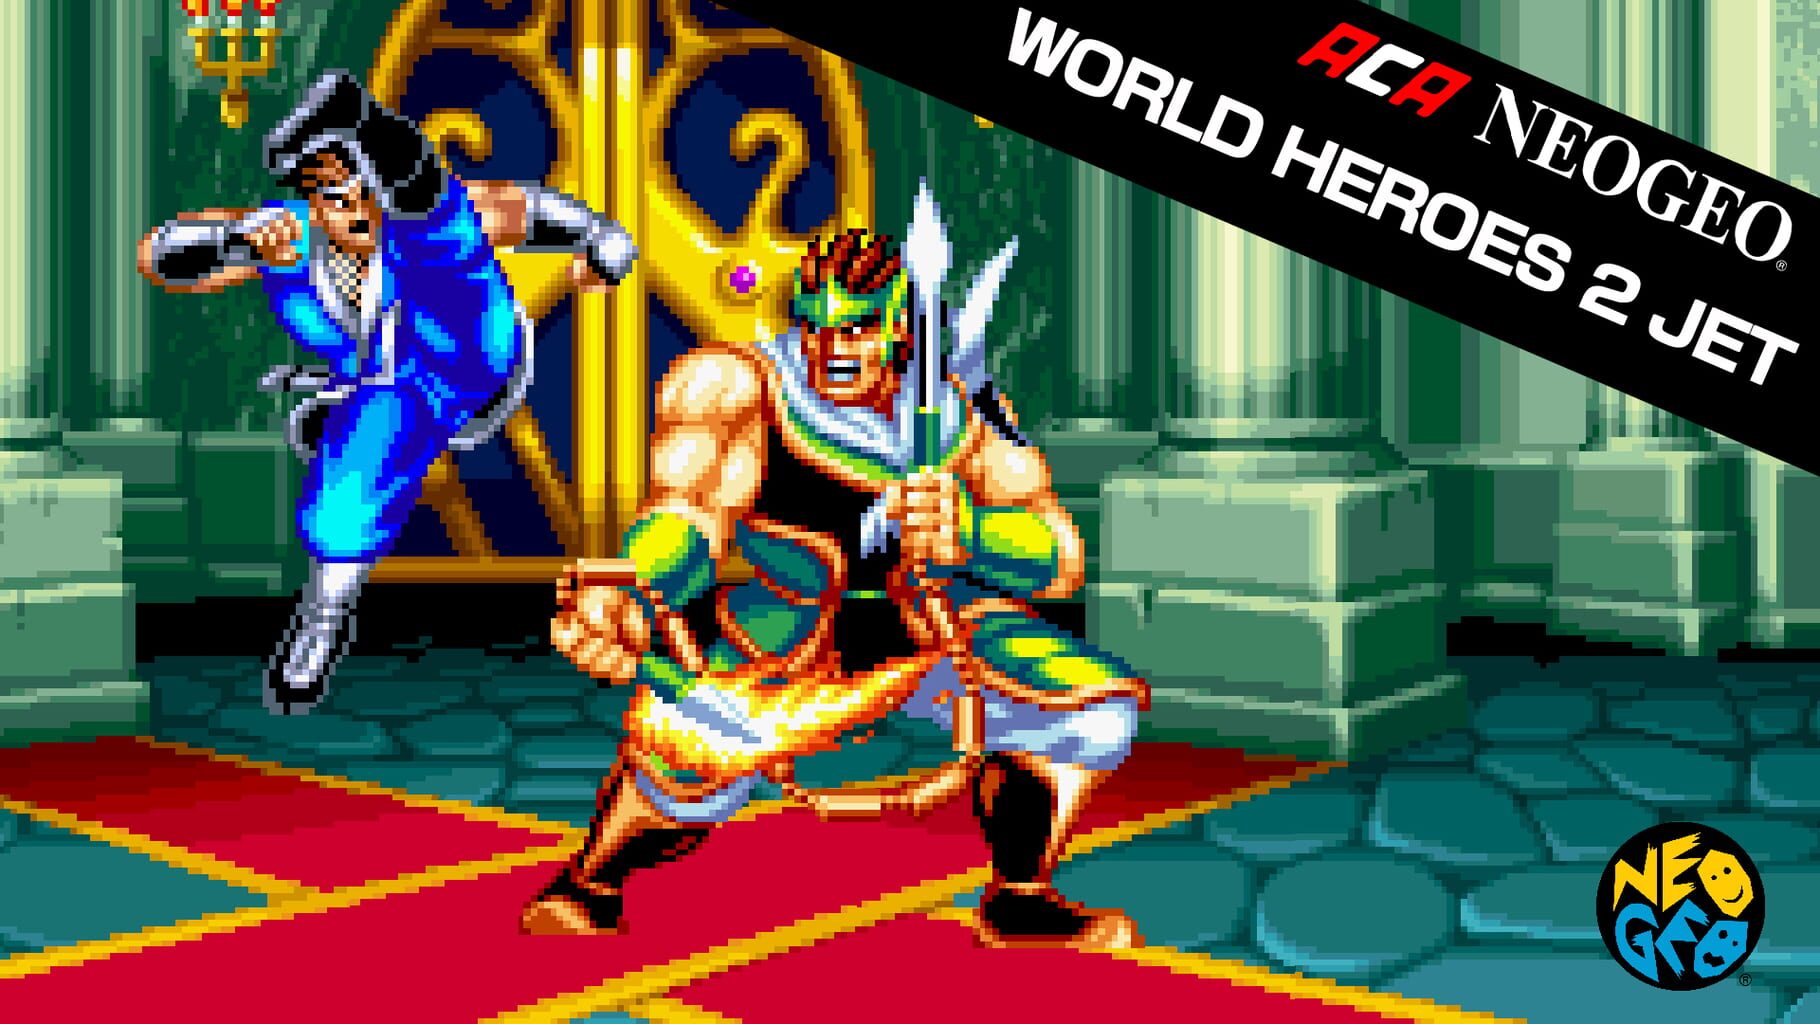 ACA Neo Geo: World Heroes 2 Jet artwork